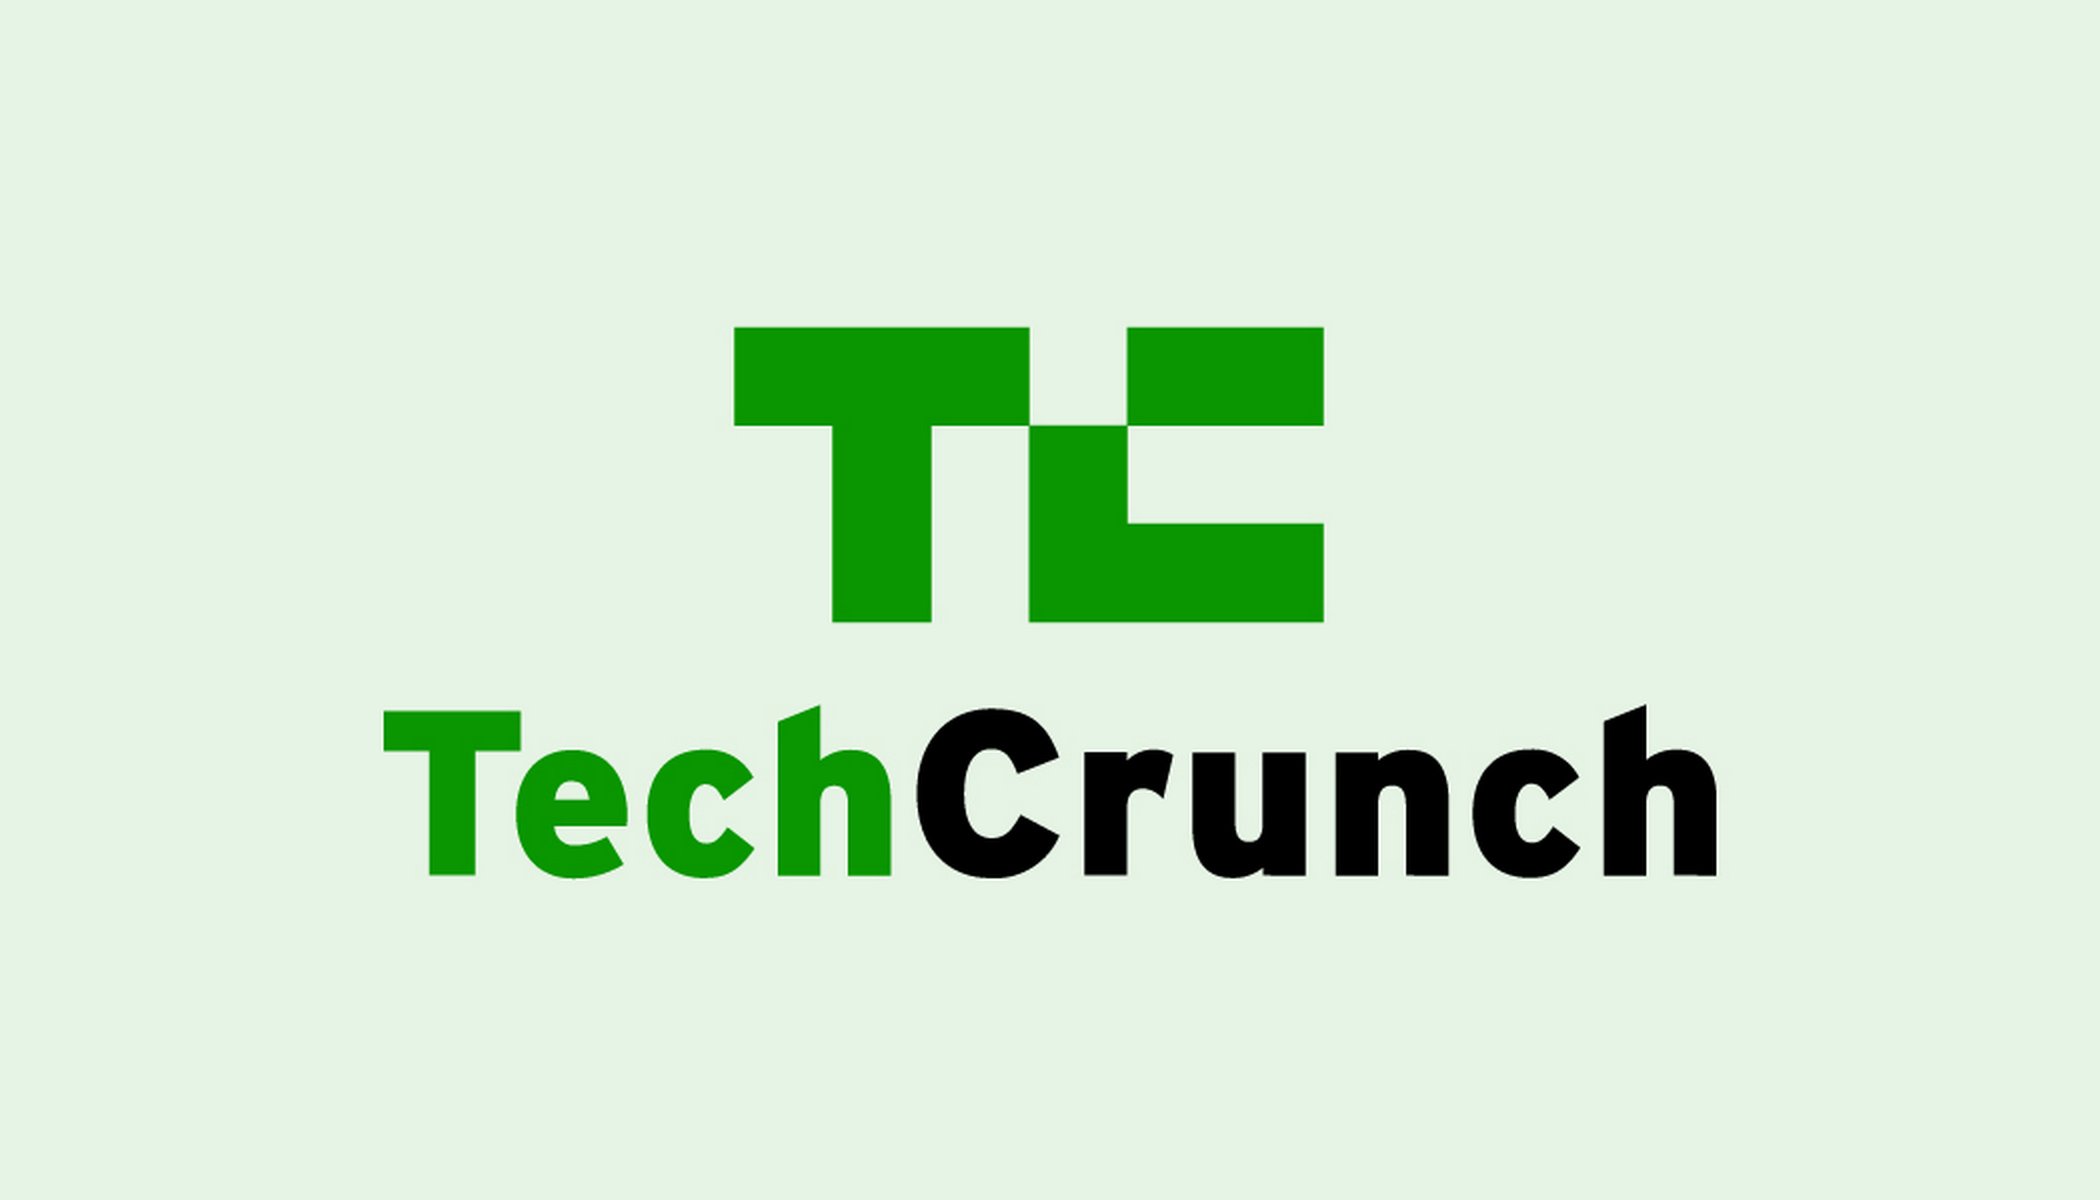 Tech Crunch logo graphic